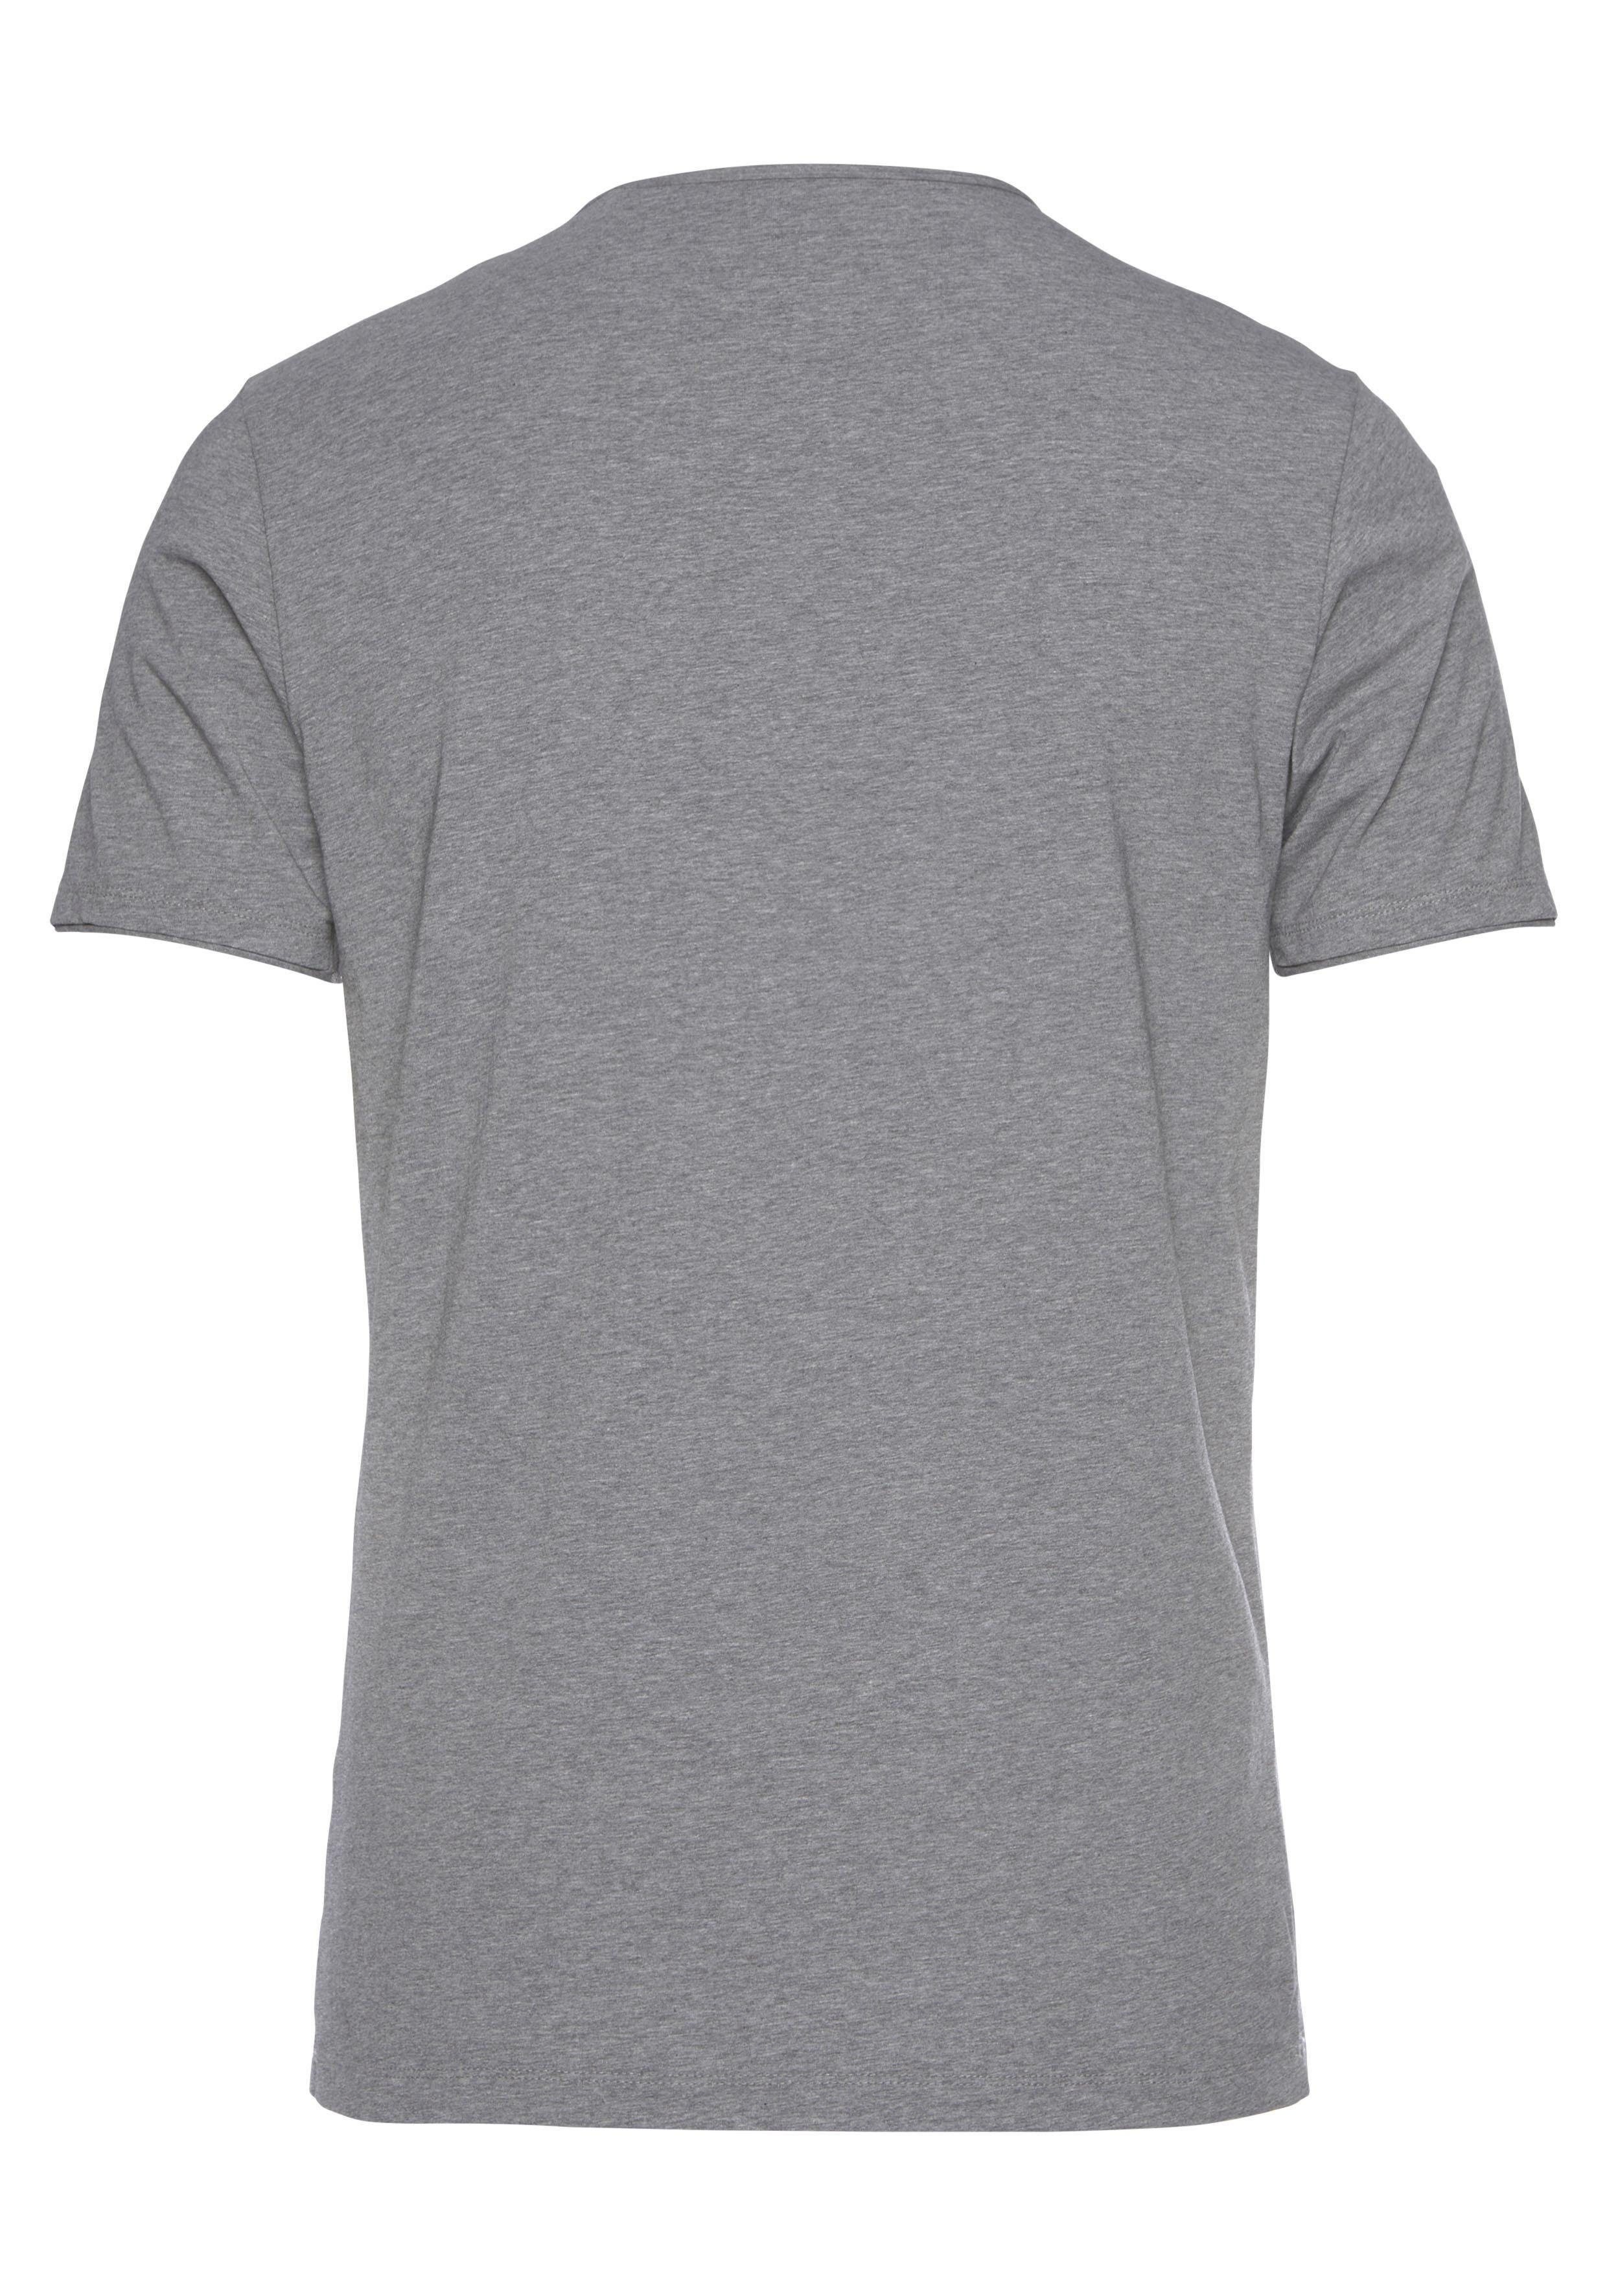 Jersey feinem fit aus body OLYMP Level T-Shirt silbergrau Five